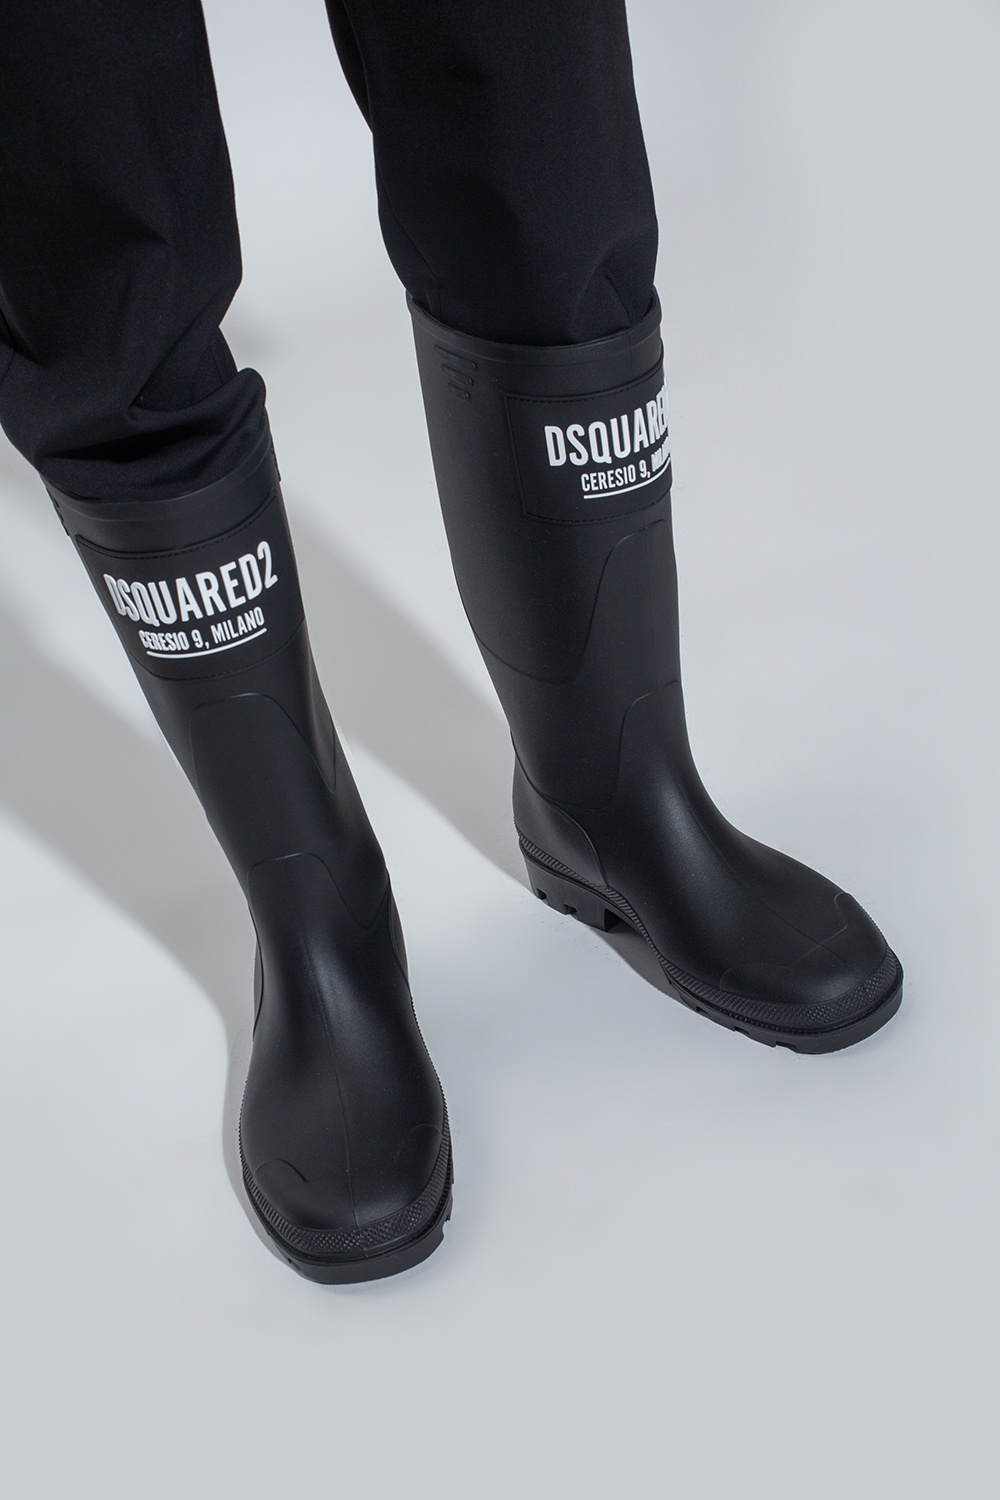 Dsquared2 Rain boots with logo | Men's Shoes | Vitkac